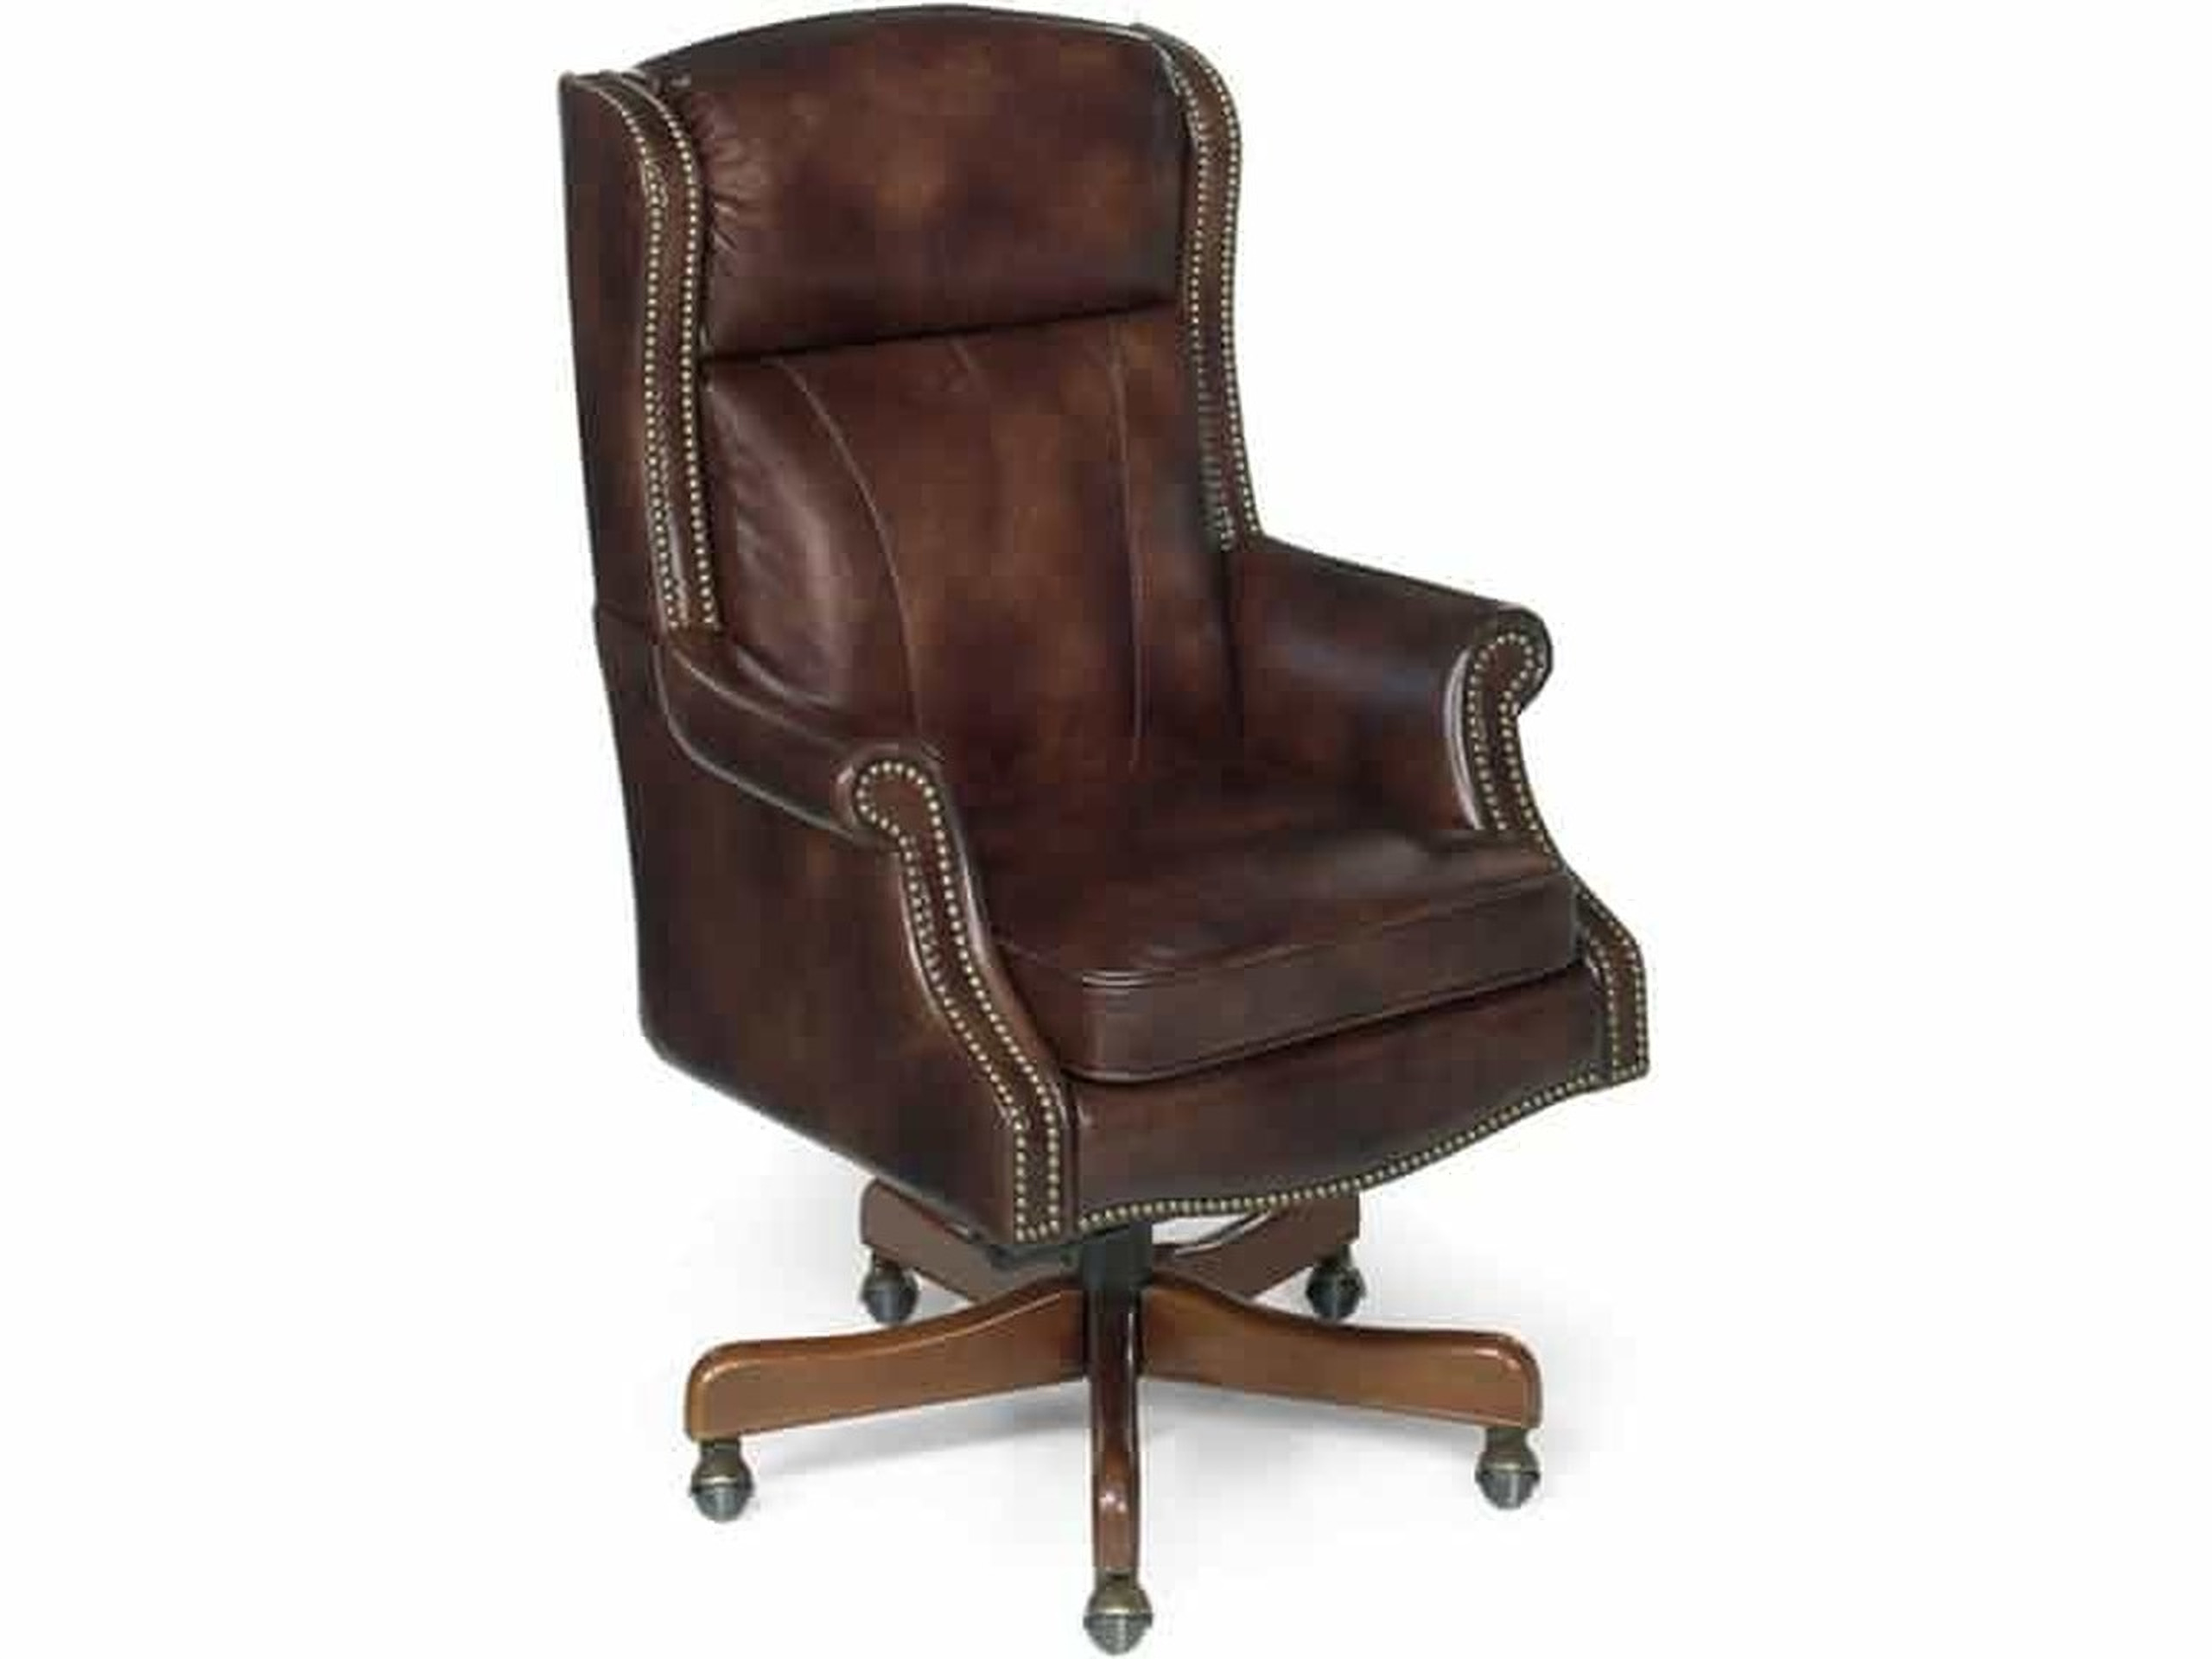 https://cdn.1stopbedrooms.com/media/catalog/product/m/e/merlin-brown-leather-executive-swivel-tilt-chair_qb1230217.jpg